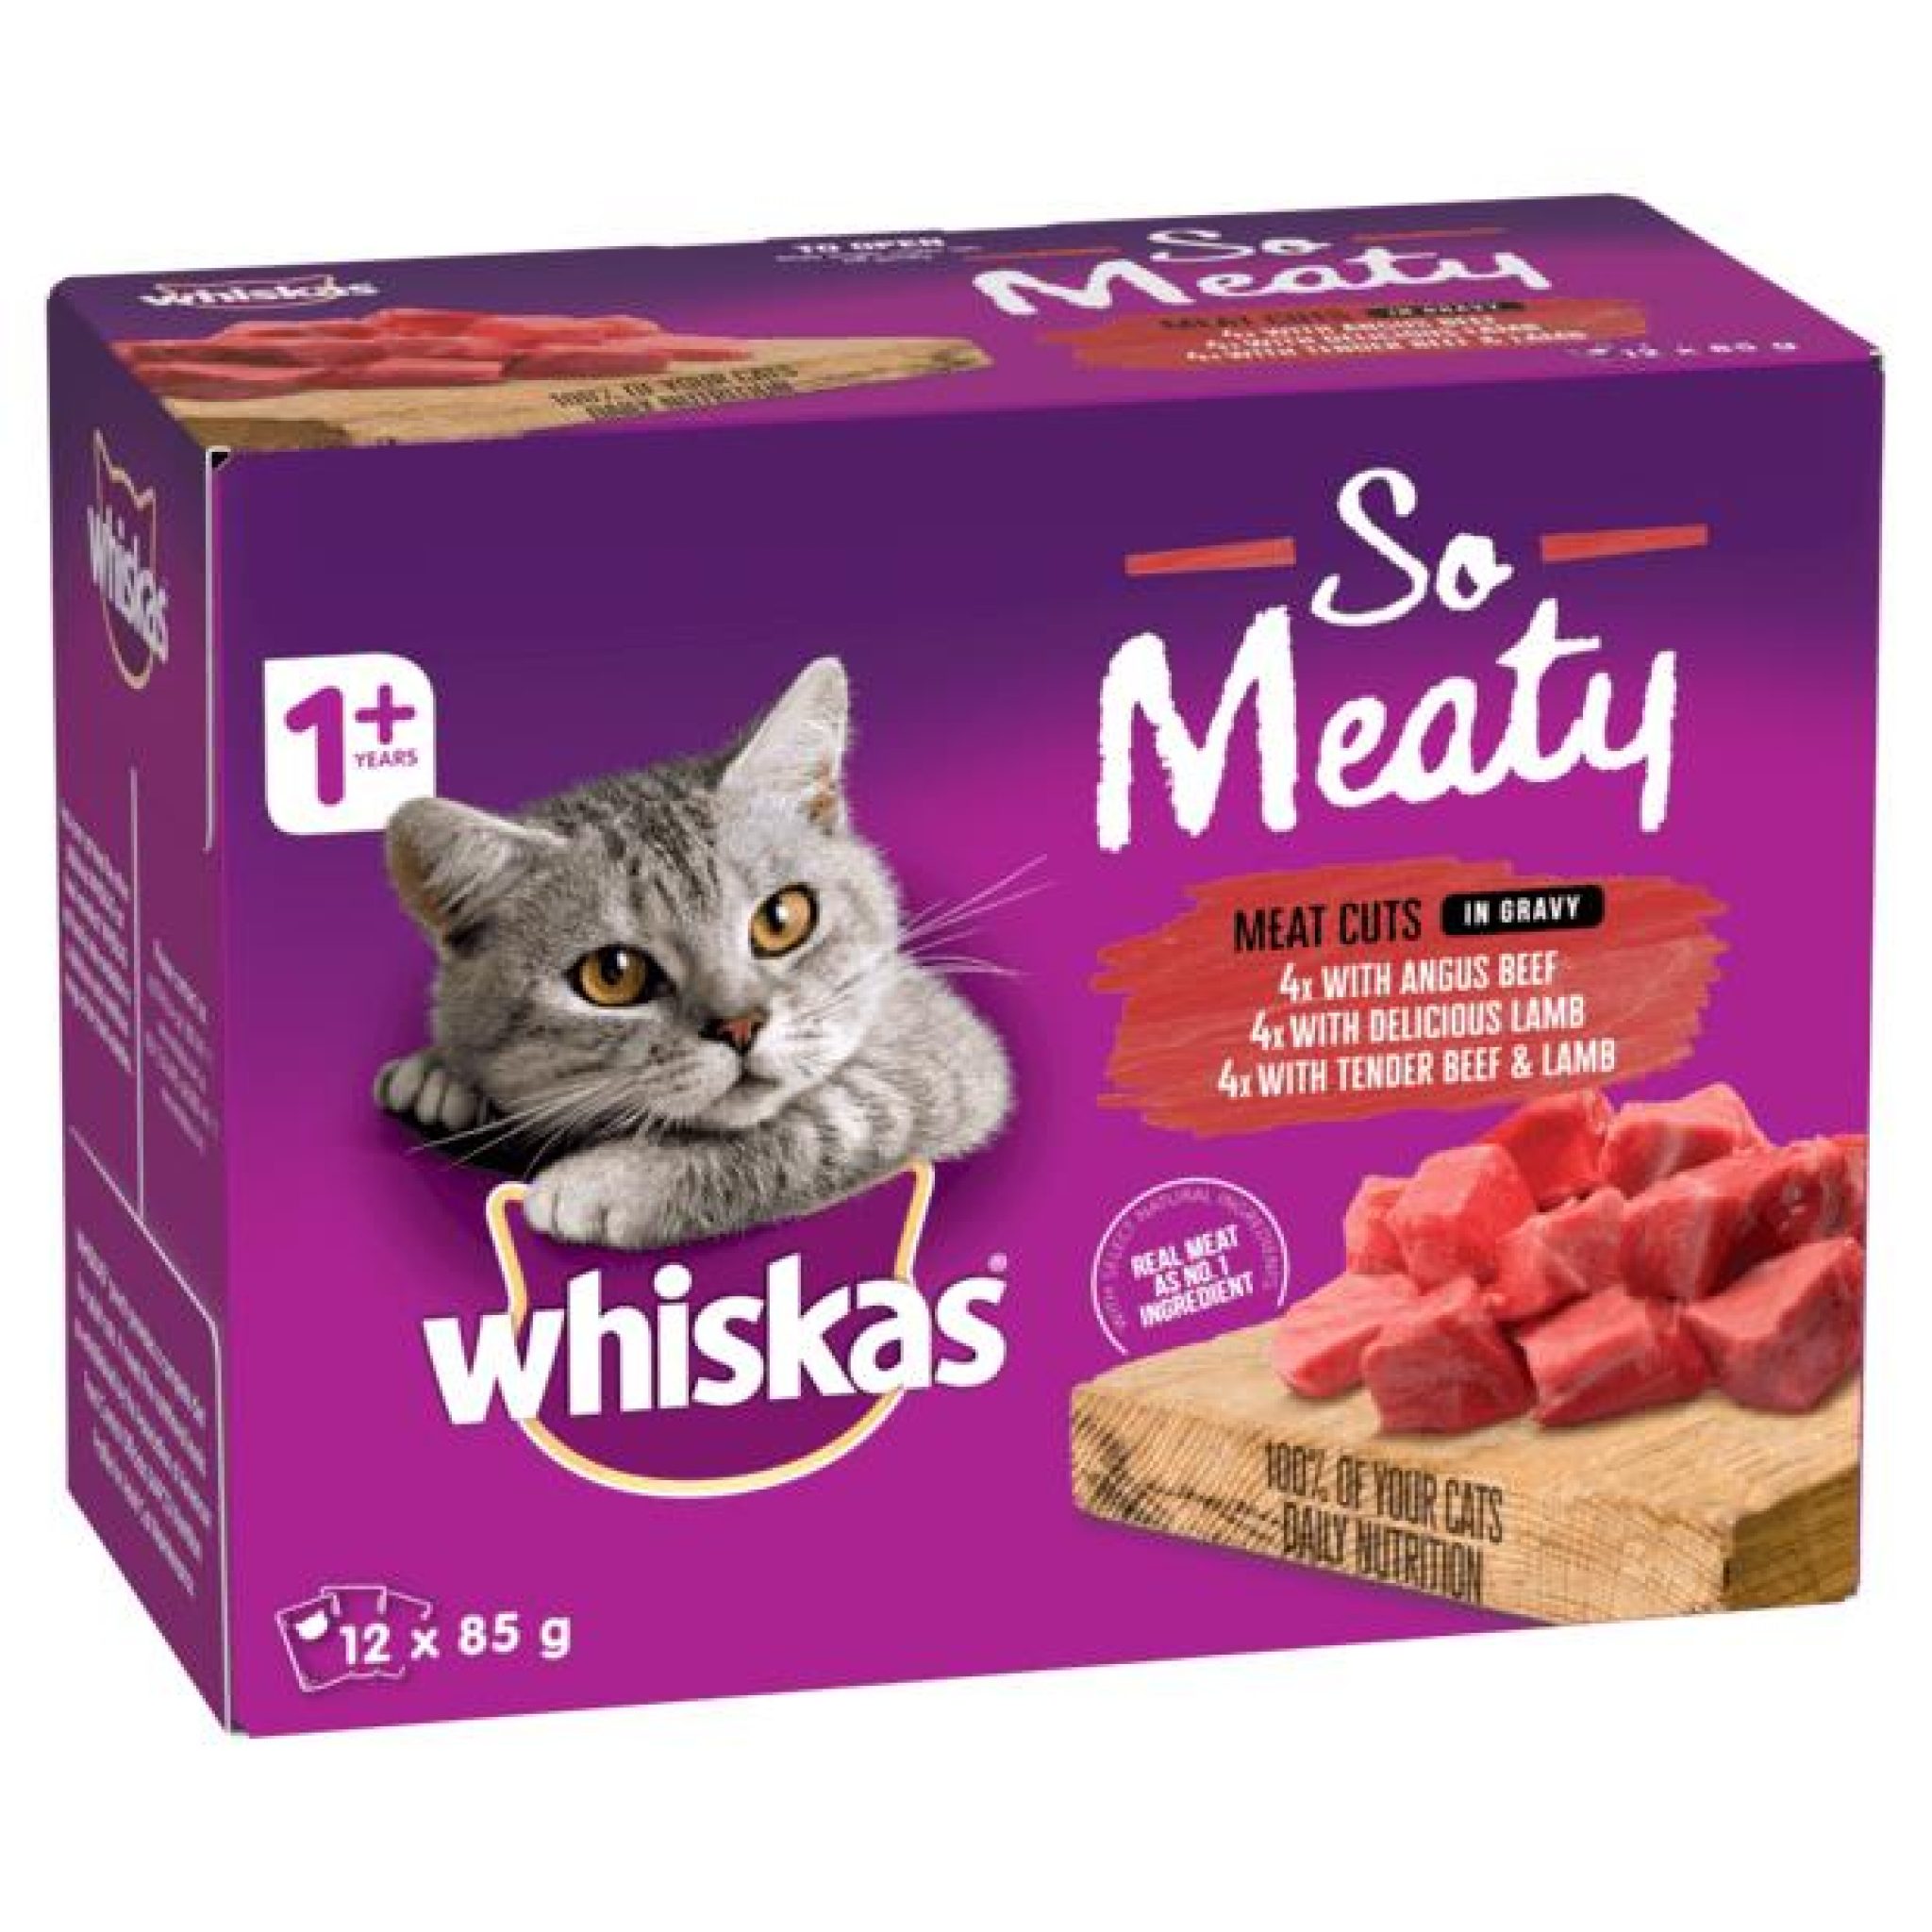 Whiskas Wet Cat Food Adult So Meaty Meat Cuts Gravy 5 X 12 X 85 G Pet